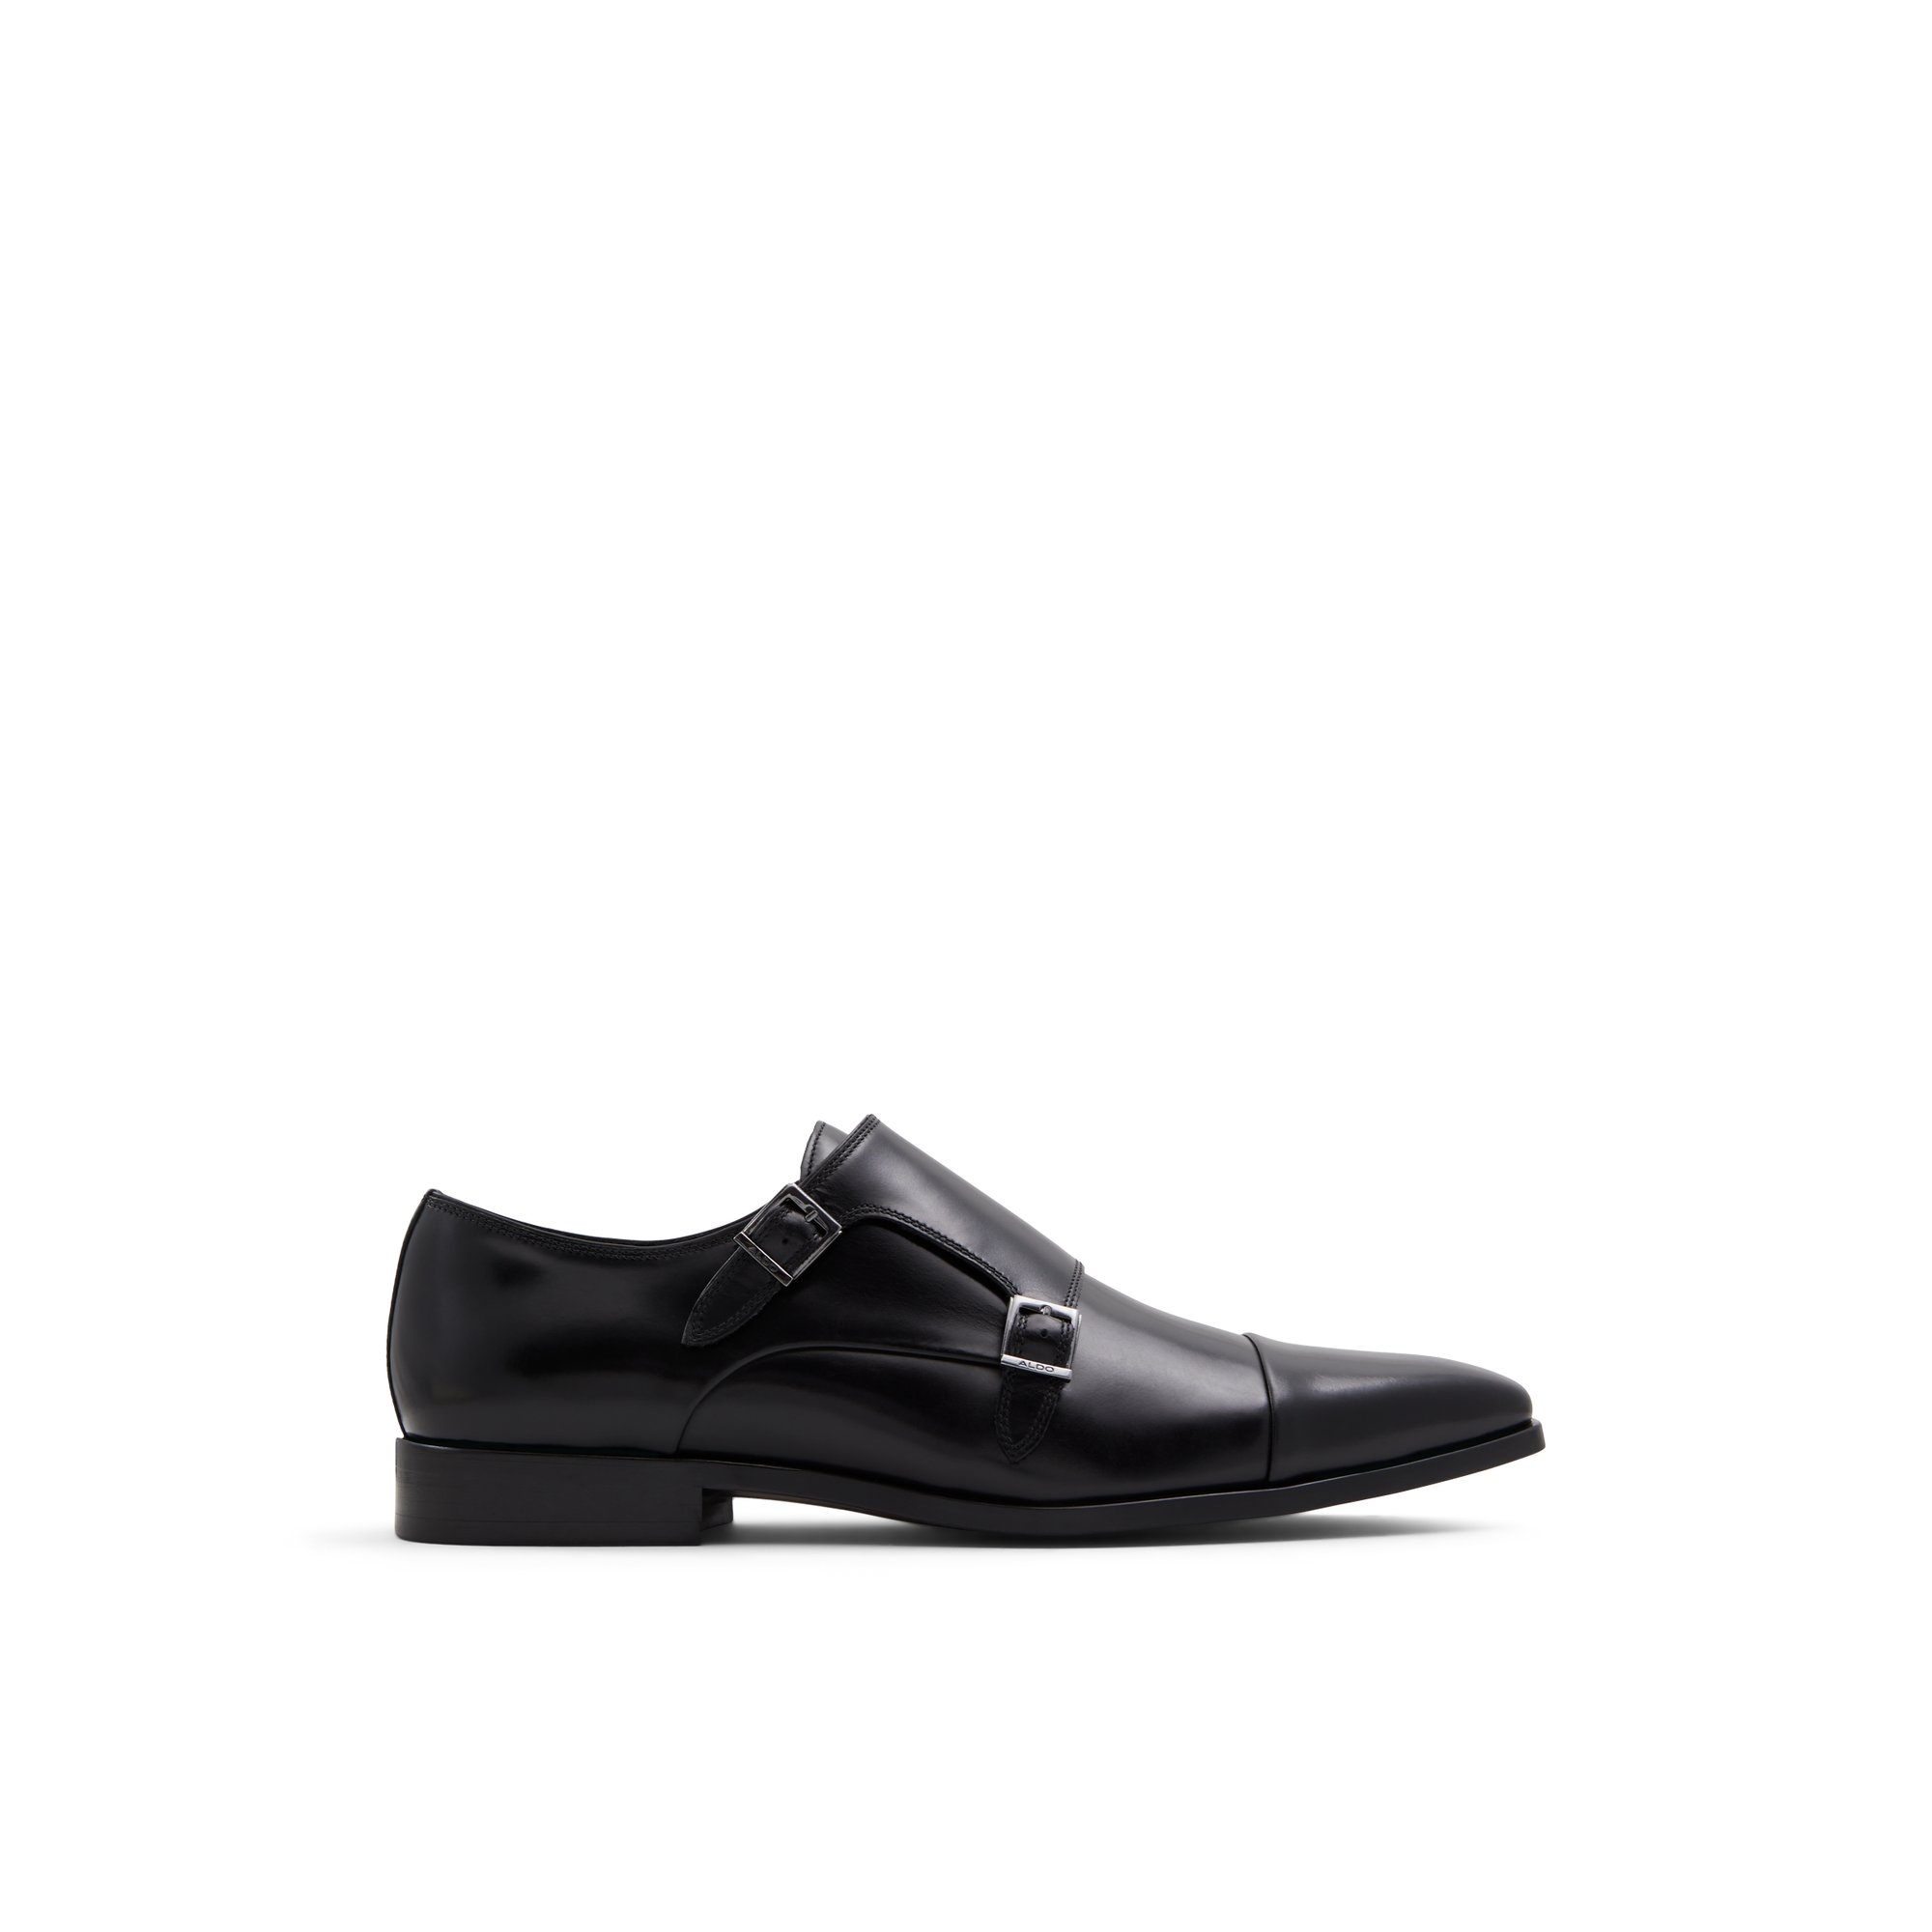 ALDO Windward - Men's Loafers and Slip Ons - Black